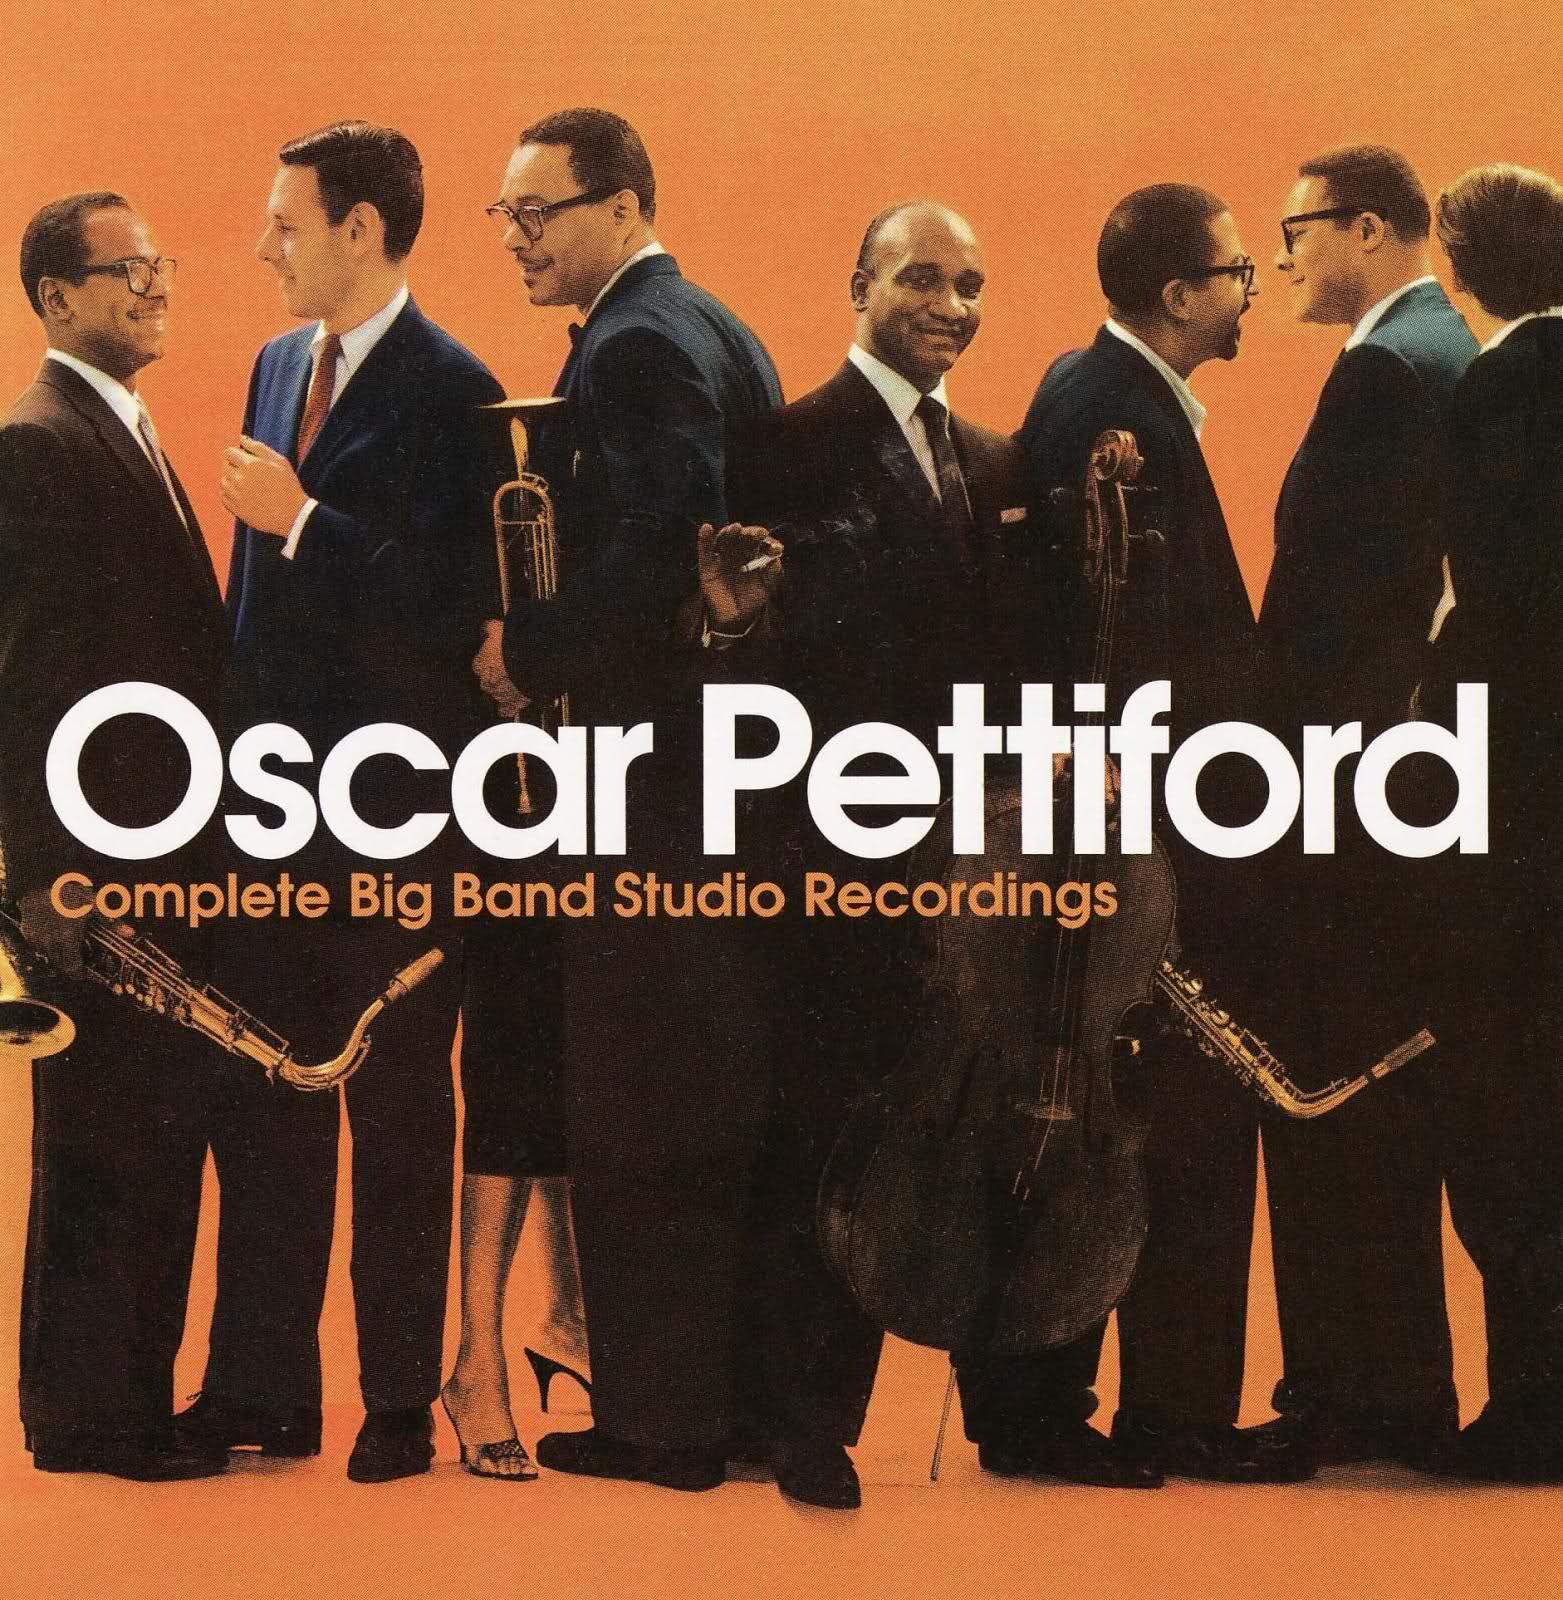 OSCAR PETTIFORD - Complete Big Band Studio Recordings cover 